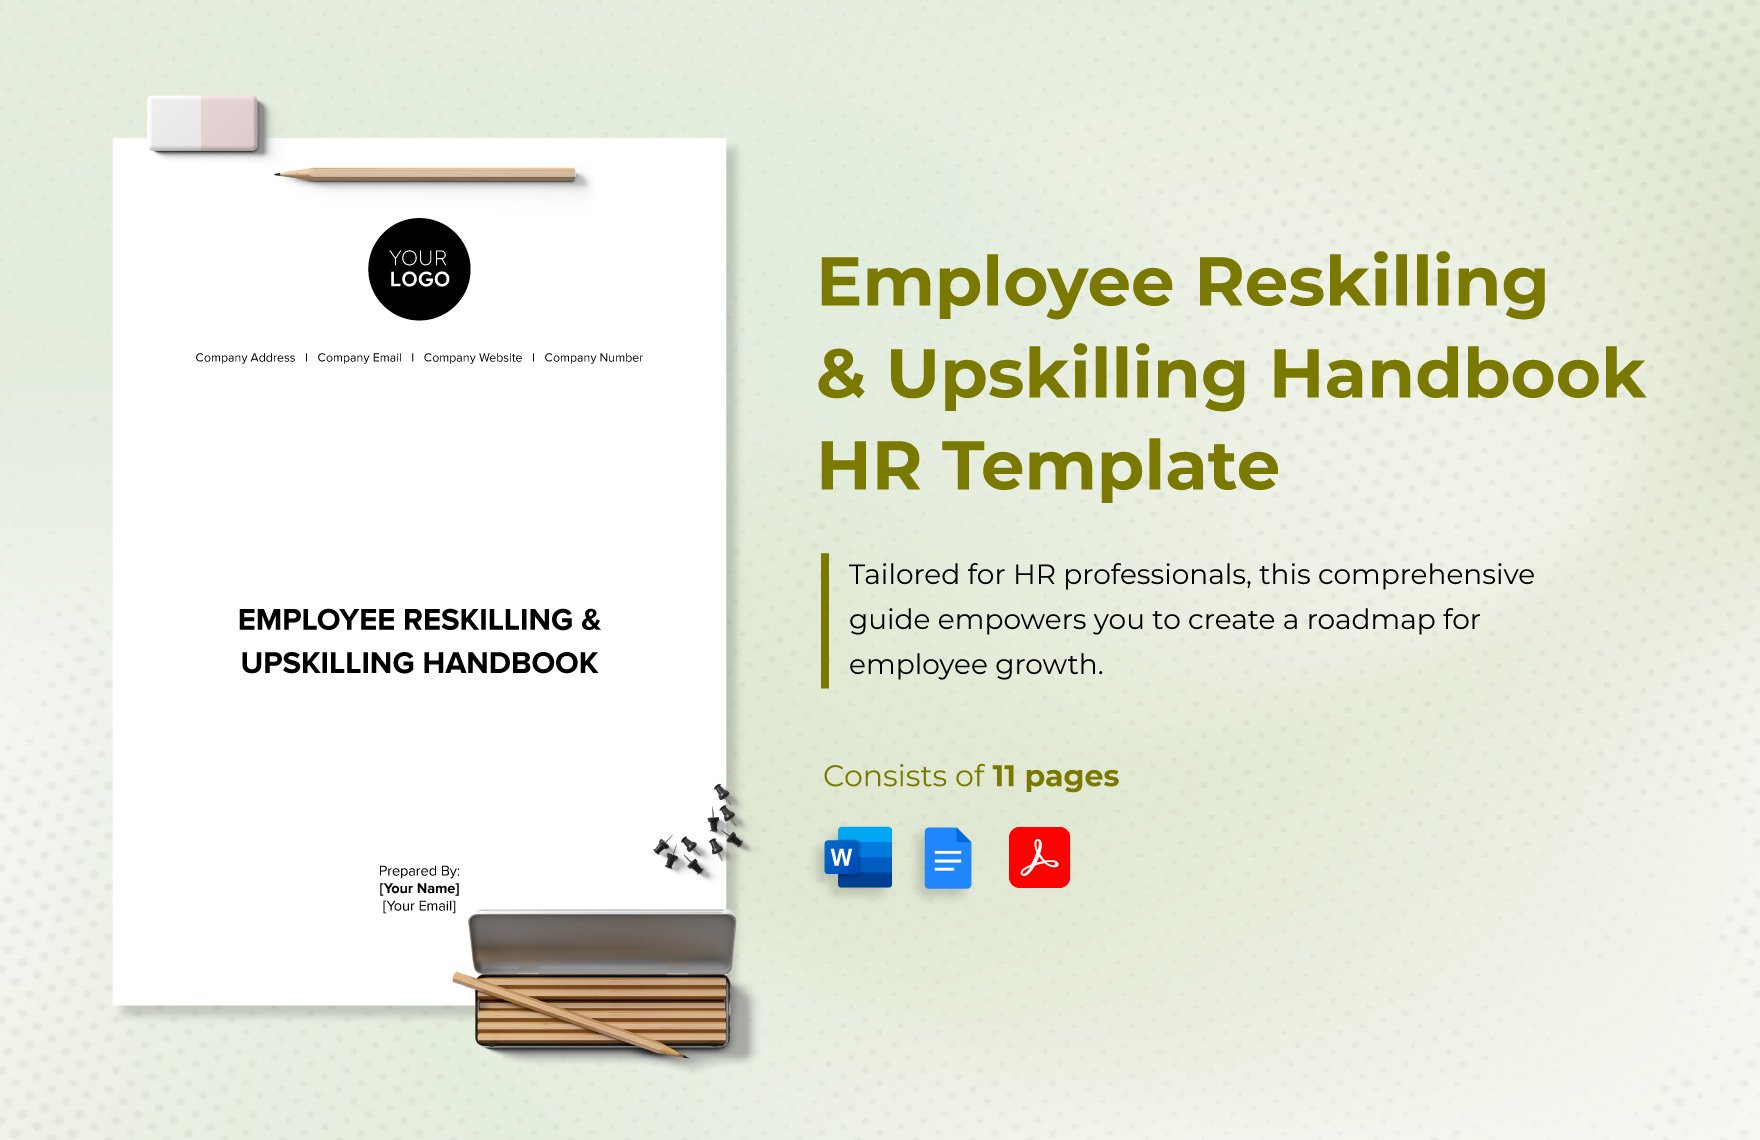 Employee Reskilling & Upskilling Handbook HR Template